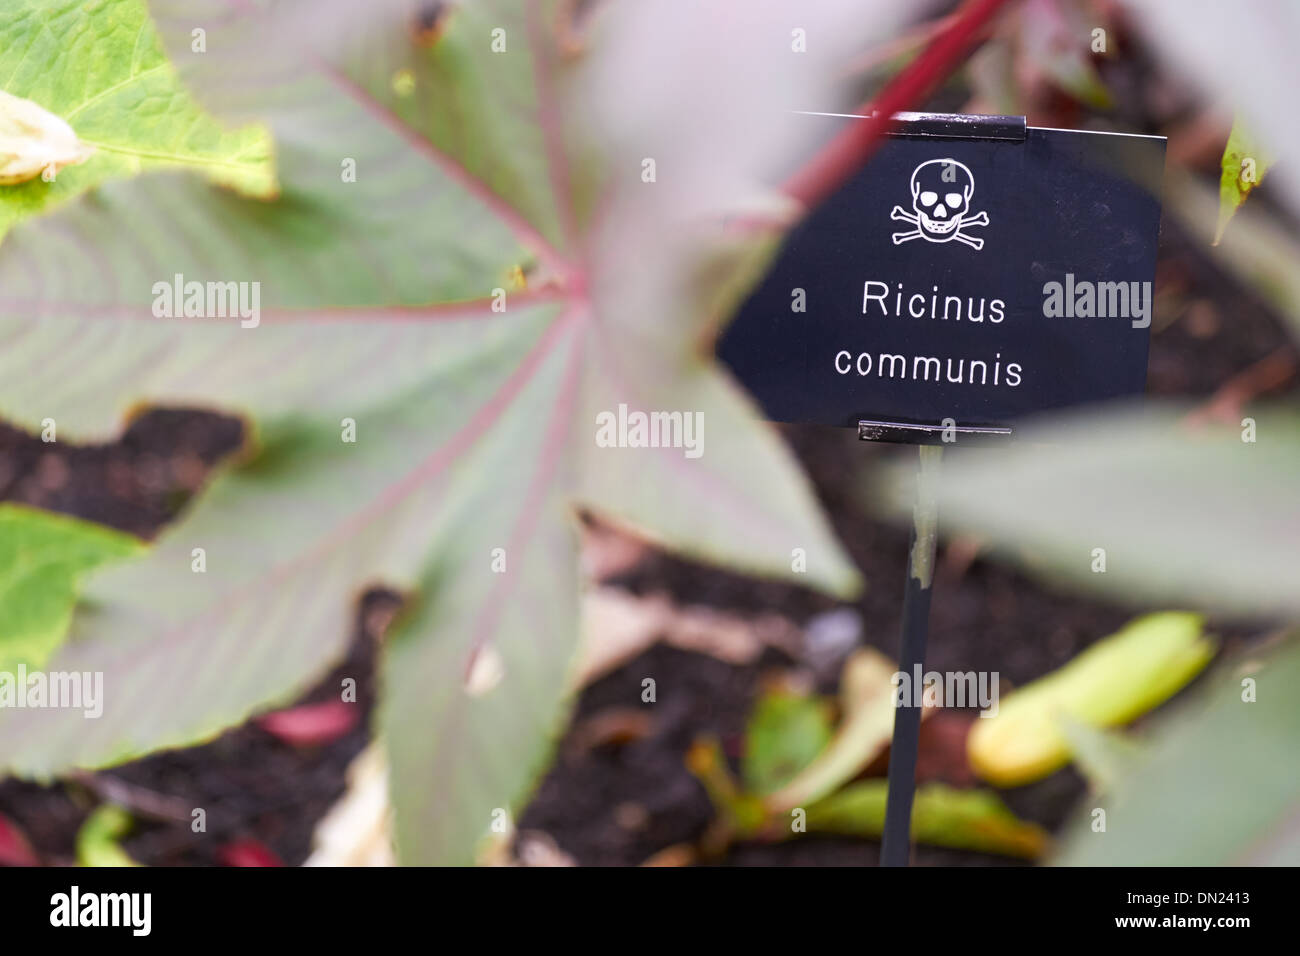 Ricinus communis, Poison garden at Alnwick Garden, Northumberland, England, UK. Stock Photo